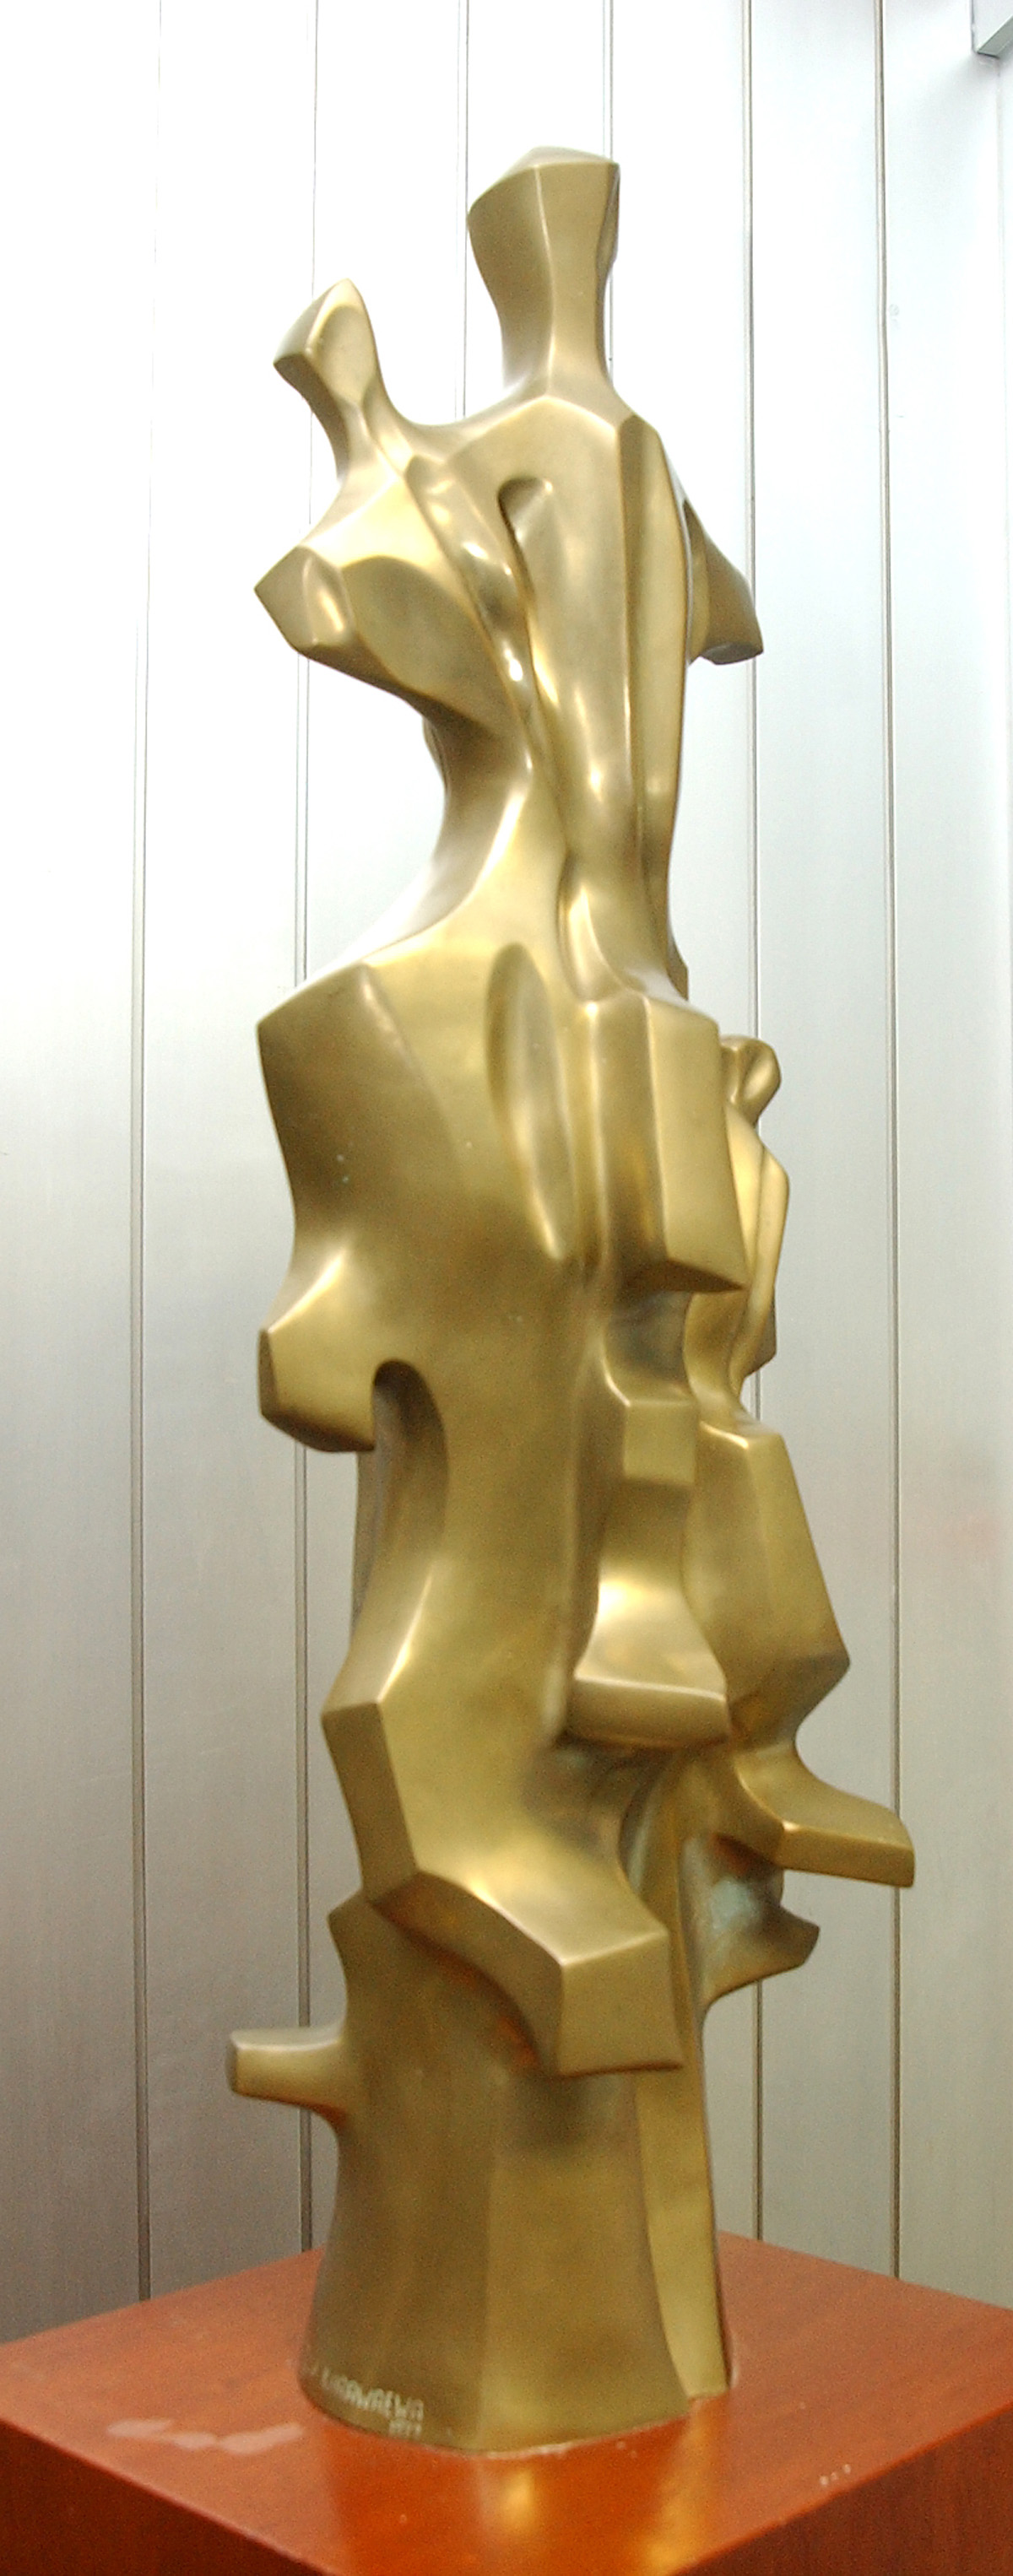 Escultura em bronze nsia de Saber <a style='float:right;color:#ccc' href='https://www3.al.sp.gov.br/repositorio/noticia/09-2008/Bellaobra2.jpg' target=_blank><i class='bi bi-zoom-in'></i> Clique para ver a imagem </a>